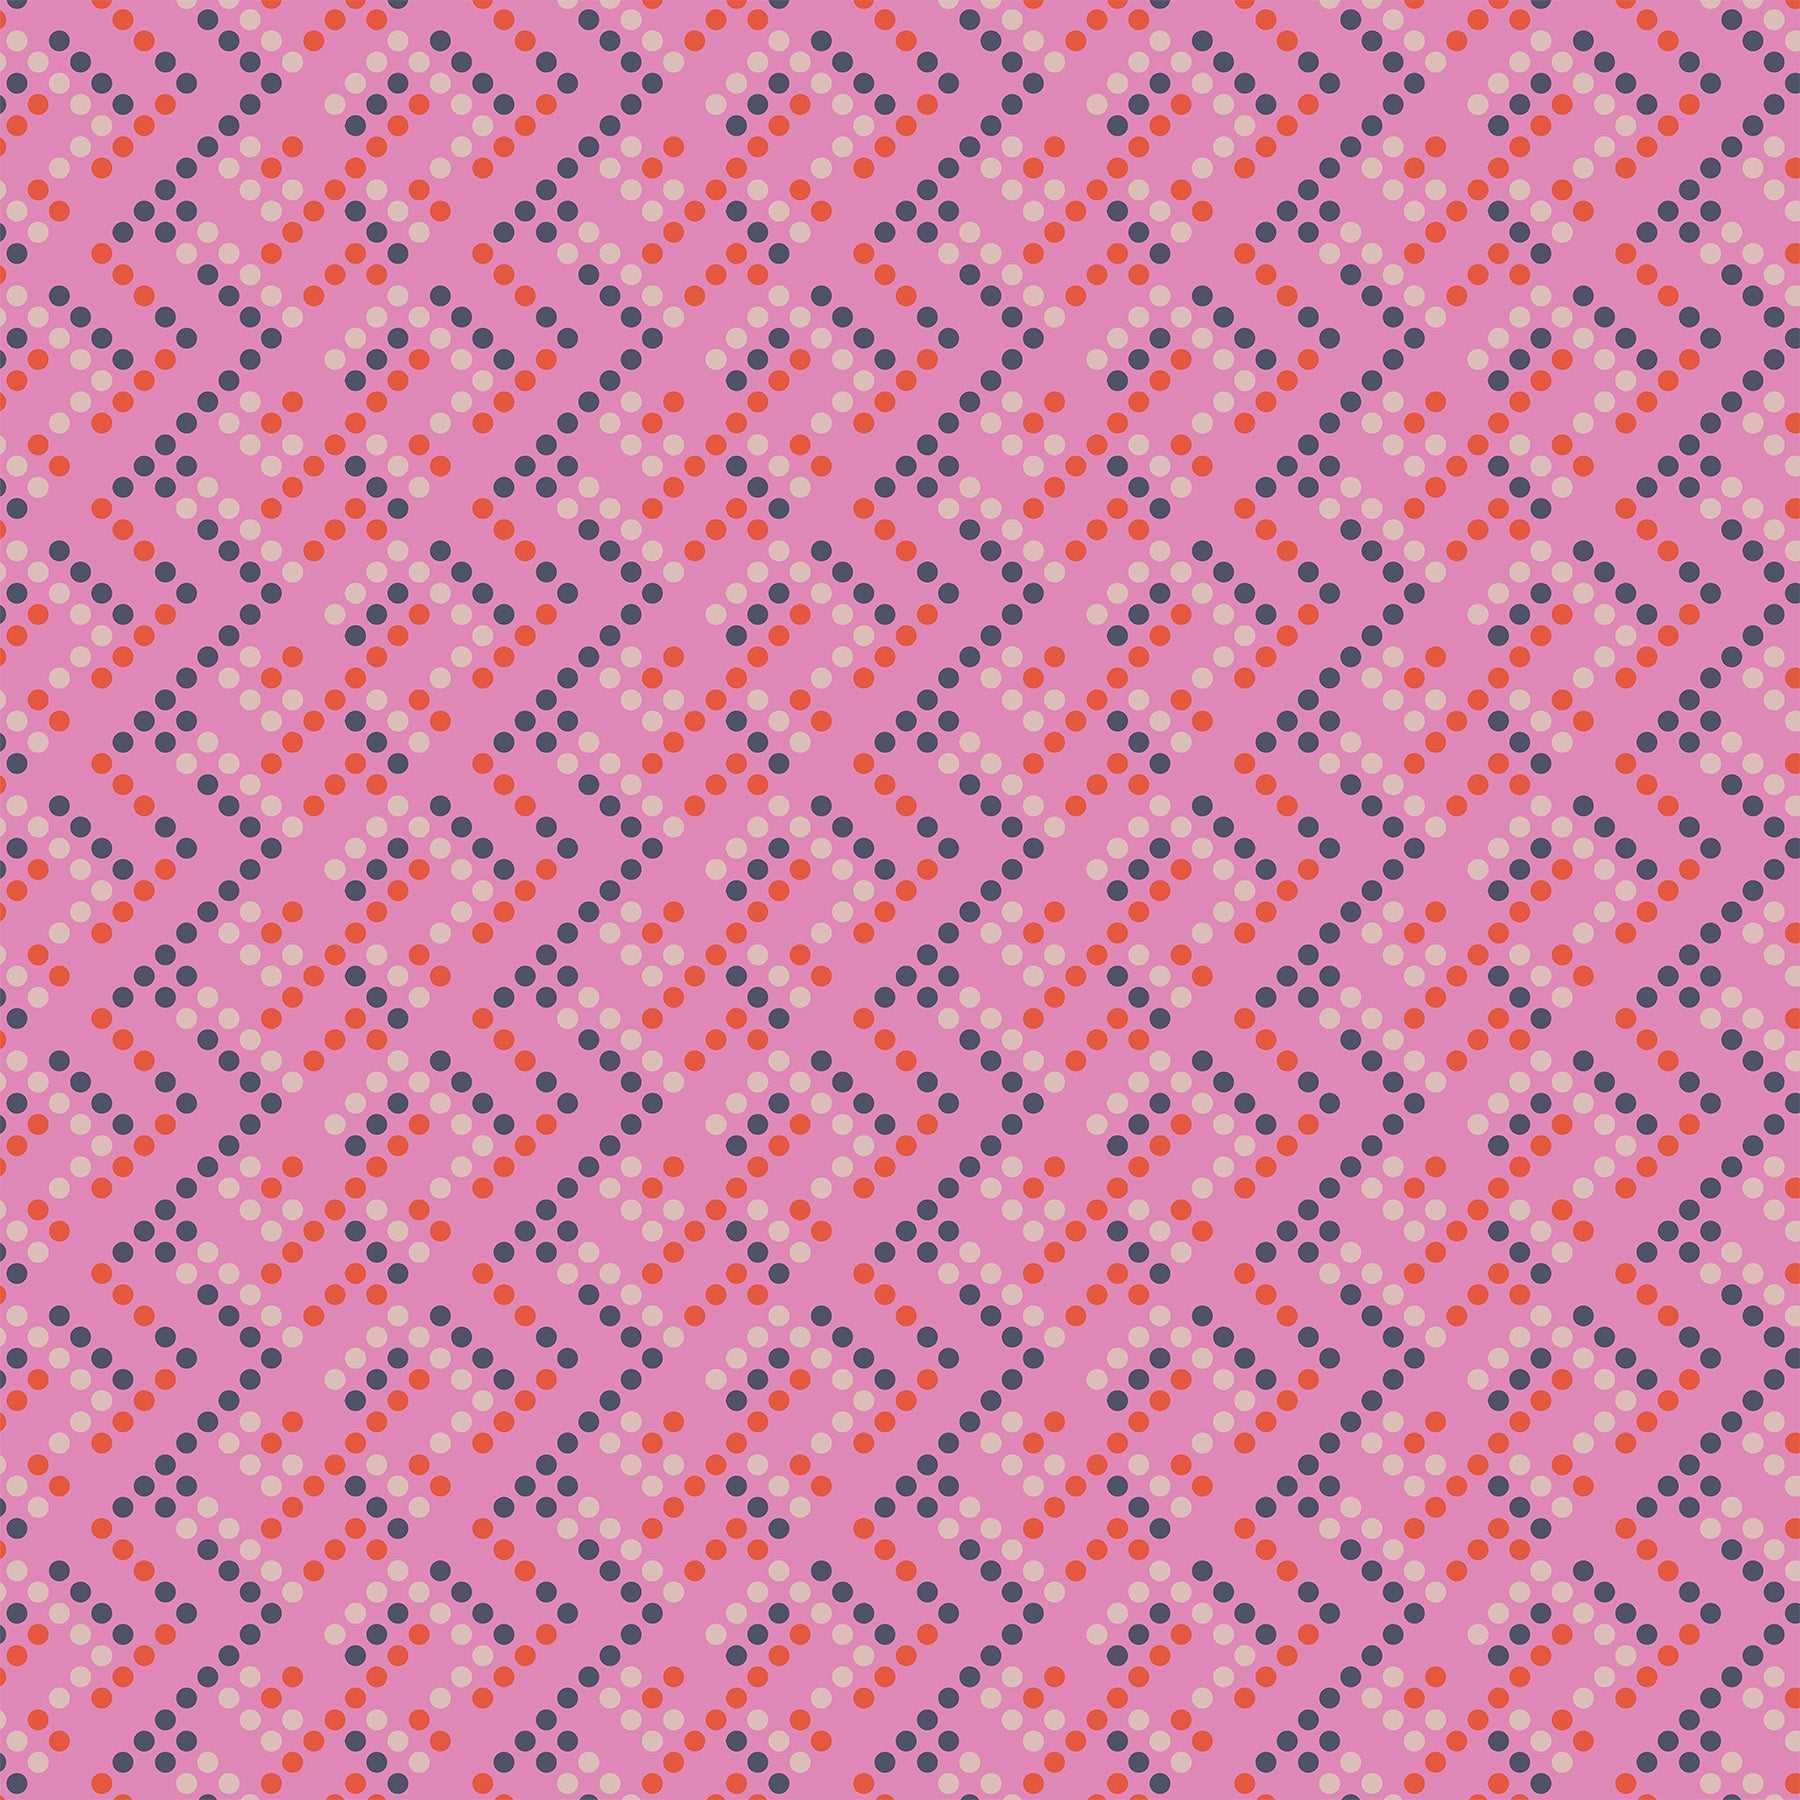 Manufacturer: Figo Fabrics Designer: Dana Willard Collection: Ghosttown Print Name: Dots in Pink Material: 100% Cotton Weight: Quilting  SKU: 90520-21 Width: 44 inches